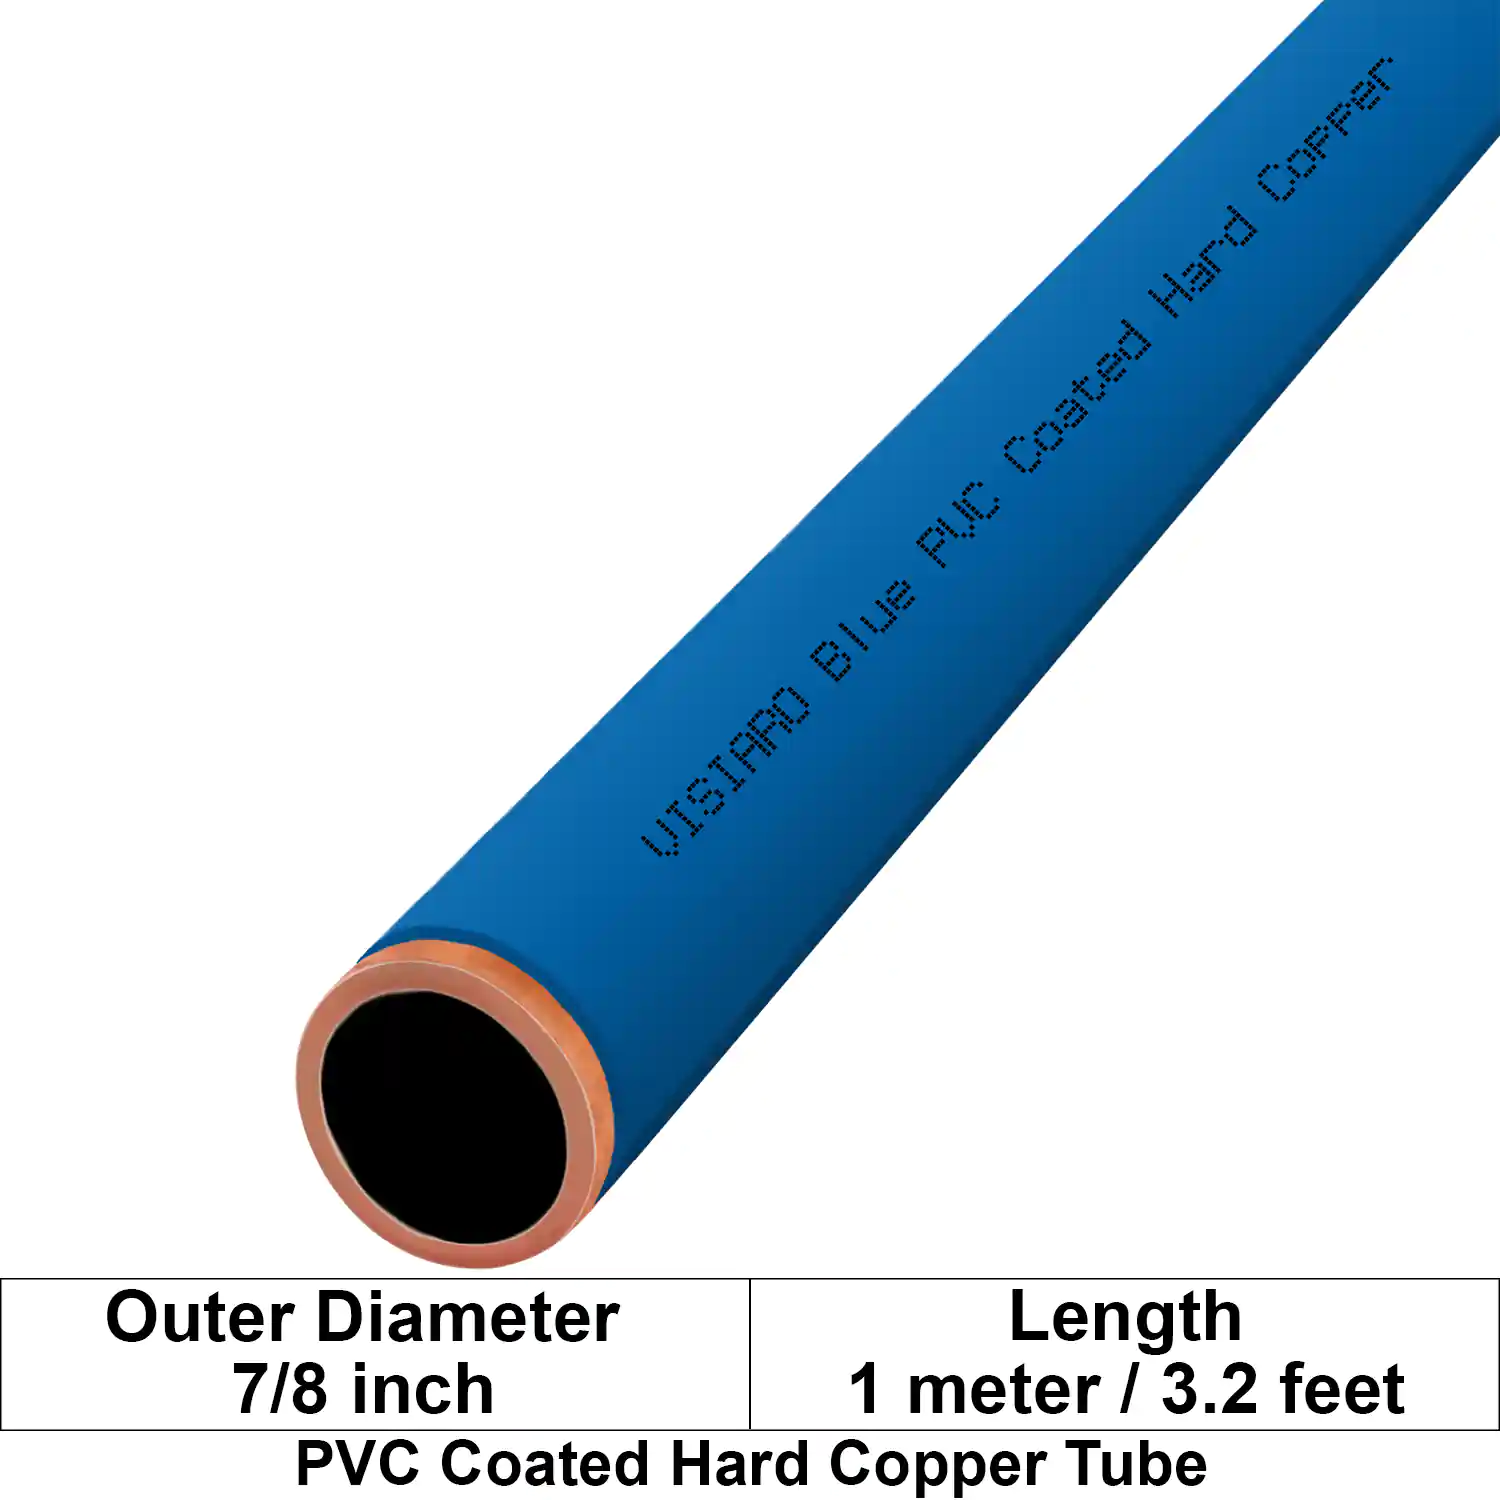 Visiaro Blue PVC Coated Hard Copper Tube 1mtr long Outer Diameter - 7/8 inch